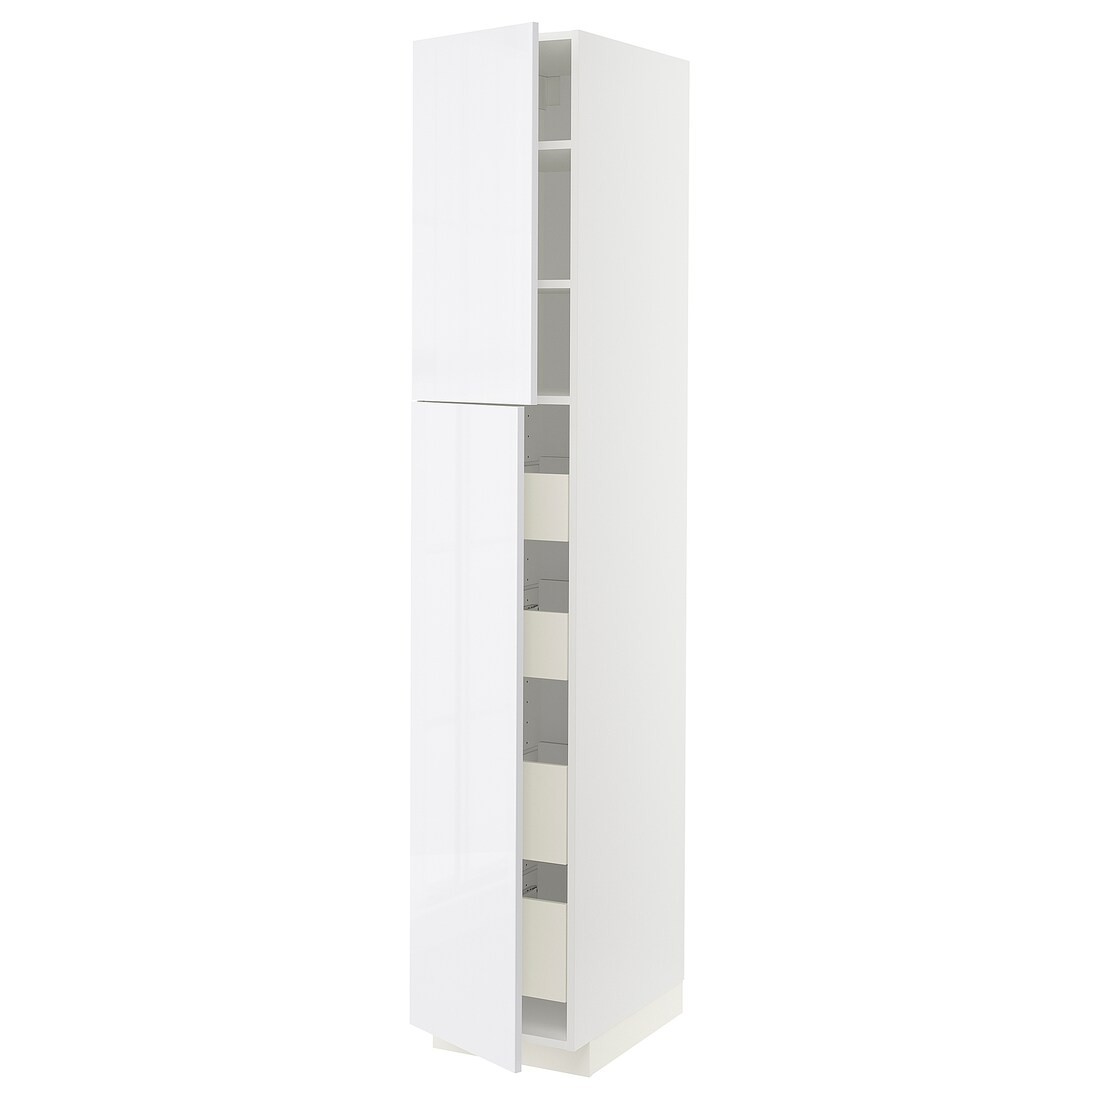 IKEA METOD МЕТОД / MAXIMERA МАКСИМЕРА Шкаф высокий 2 двери / 4 ящика, белый / Ringhult белый, 40x60x220 см 79460273 | 794.602.73